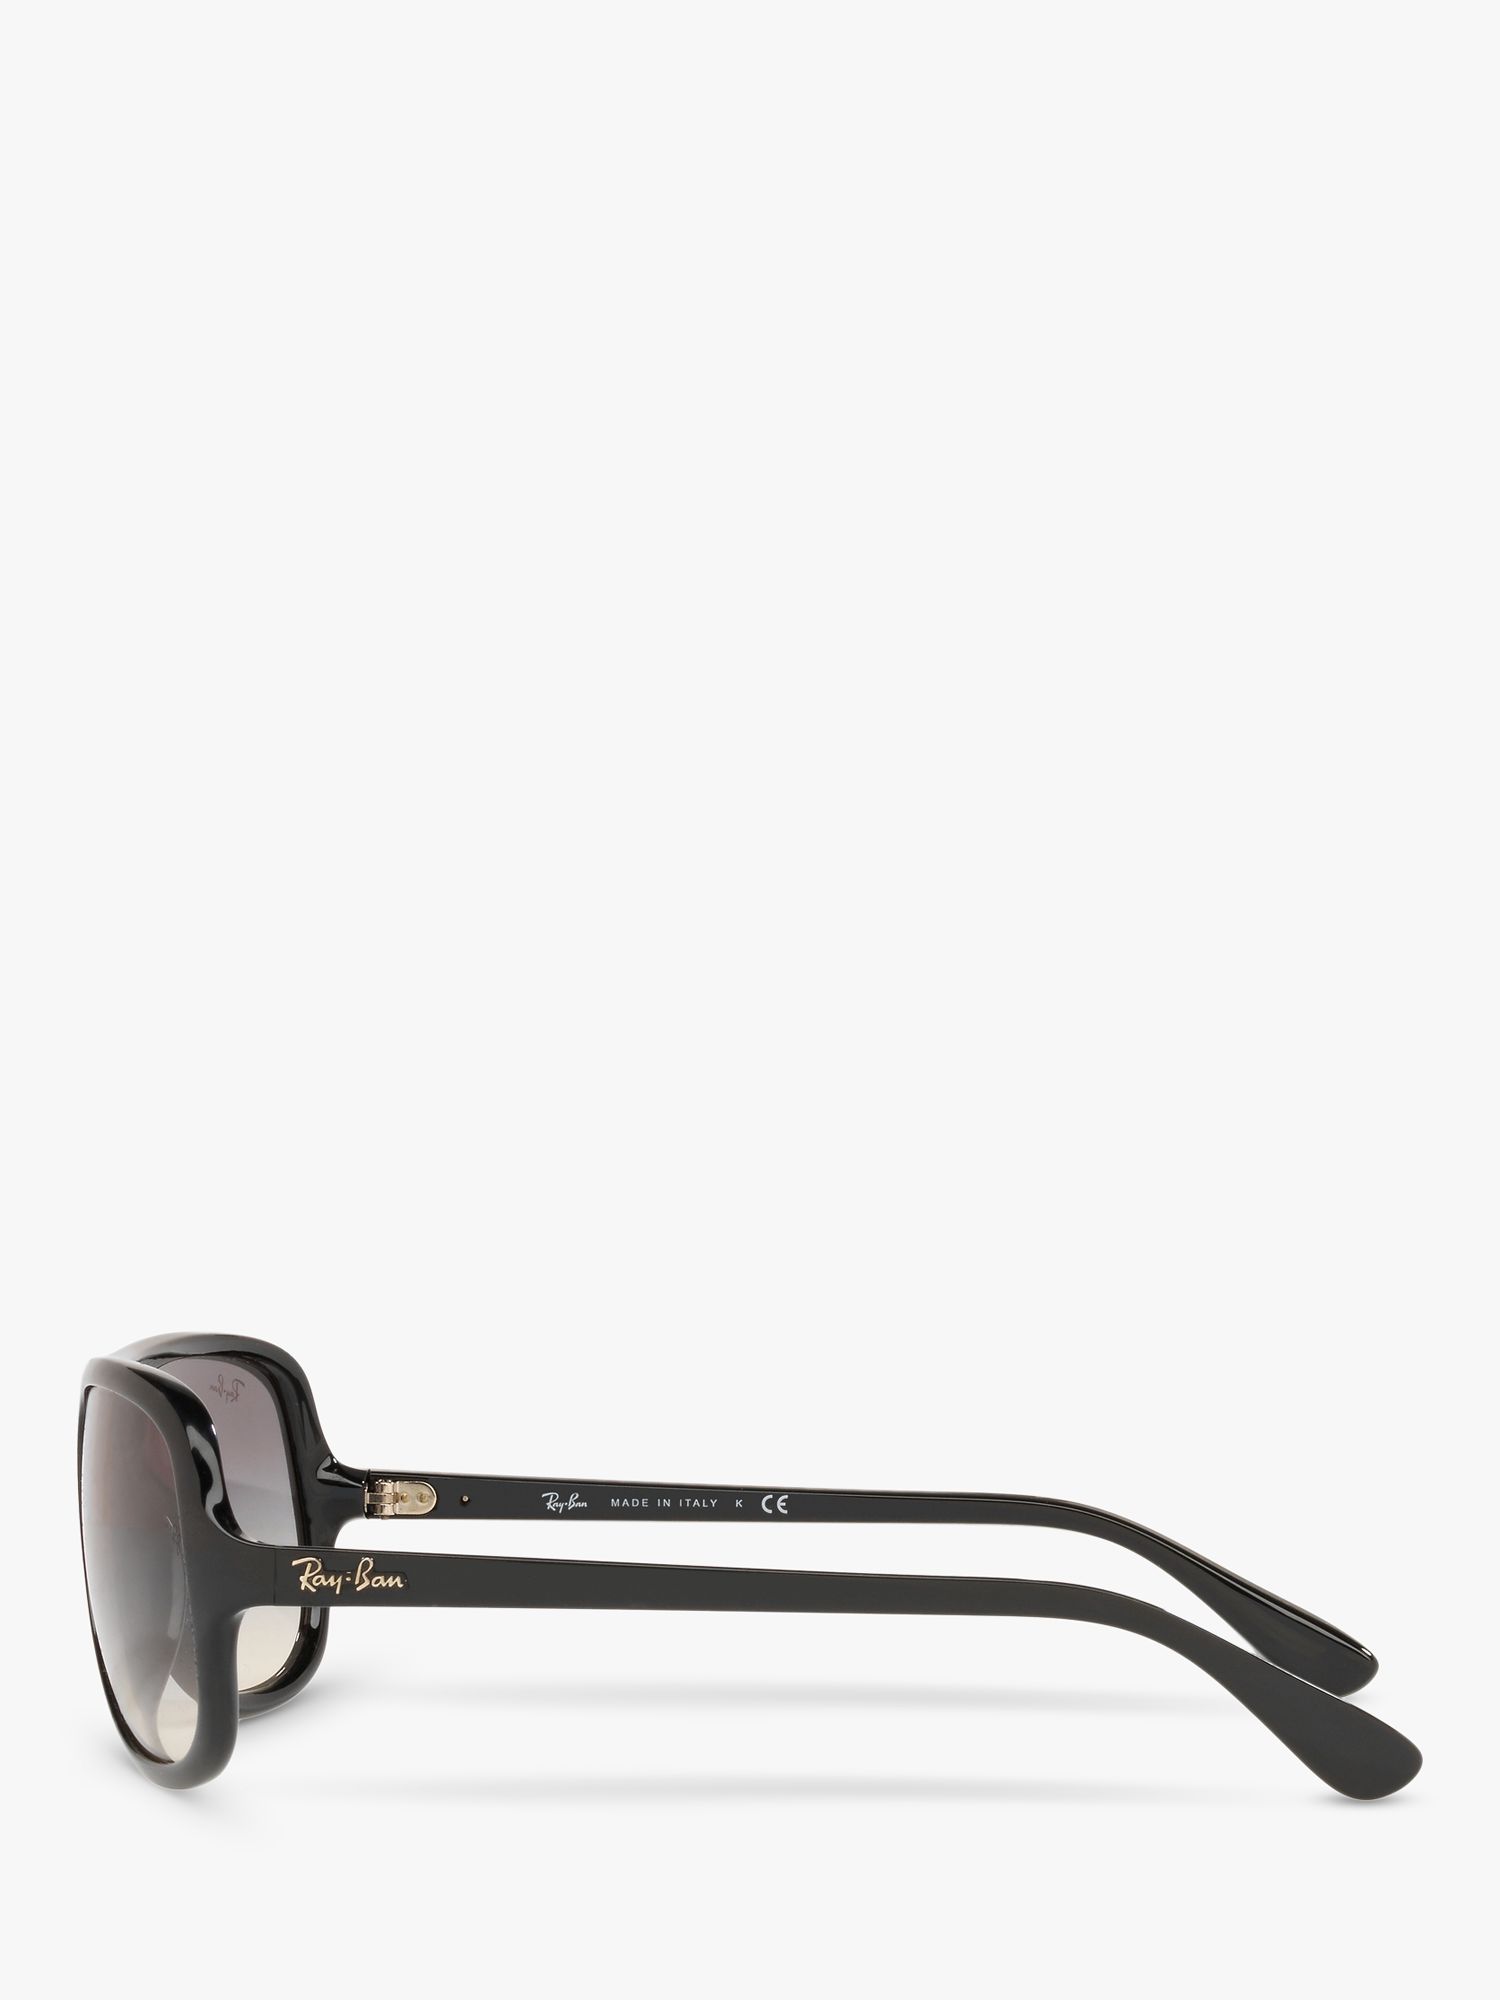 Ray-Ban RB4162 Men's Aviator Sunglasses, Black/Grey Gradient